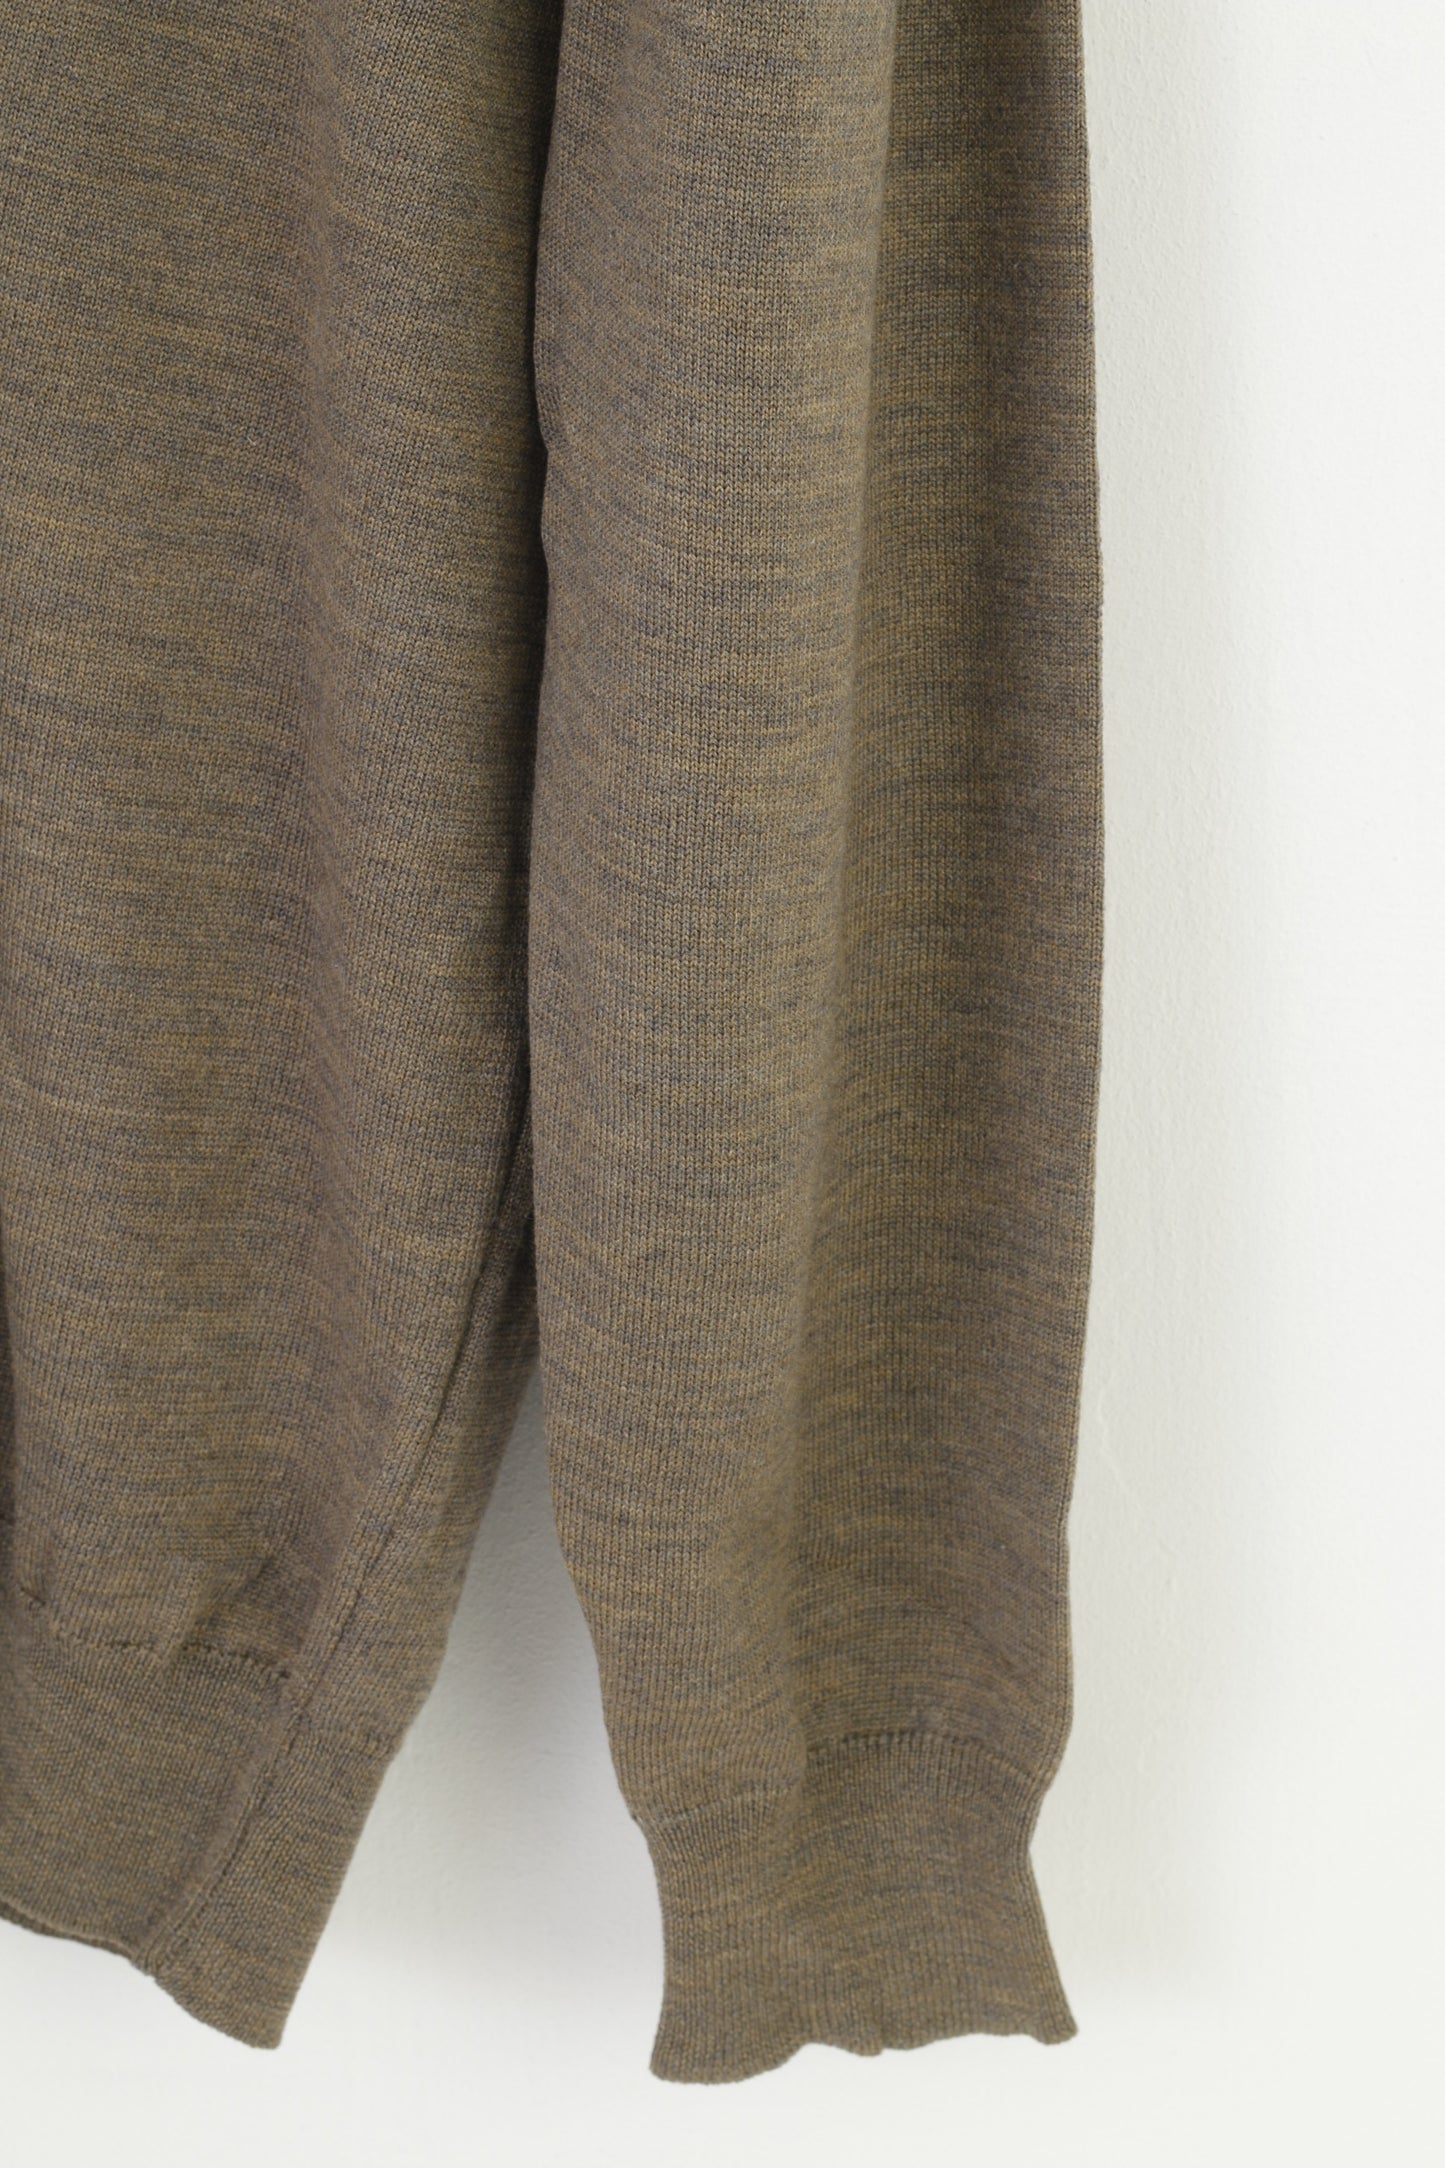 Rene Lezard Men 54 XL Jumper Brown Grey  Merino Wool Made in Italy Sweater V Neck Vintage Top